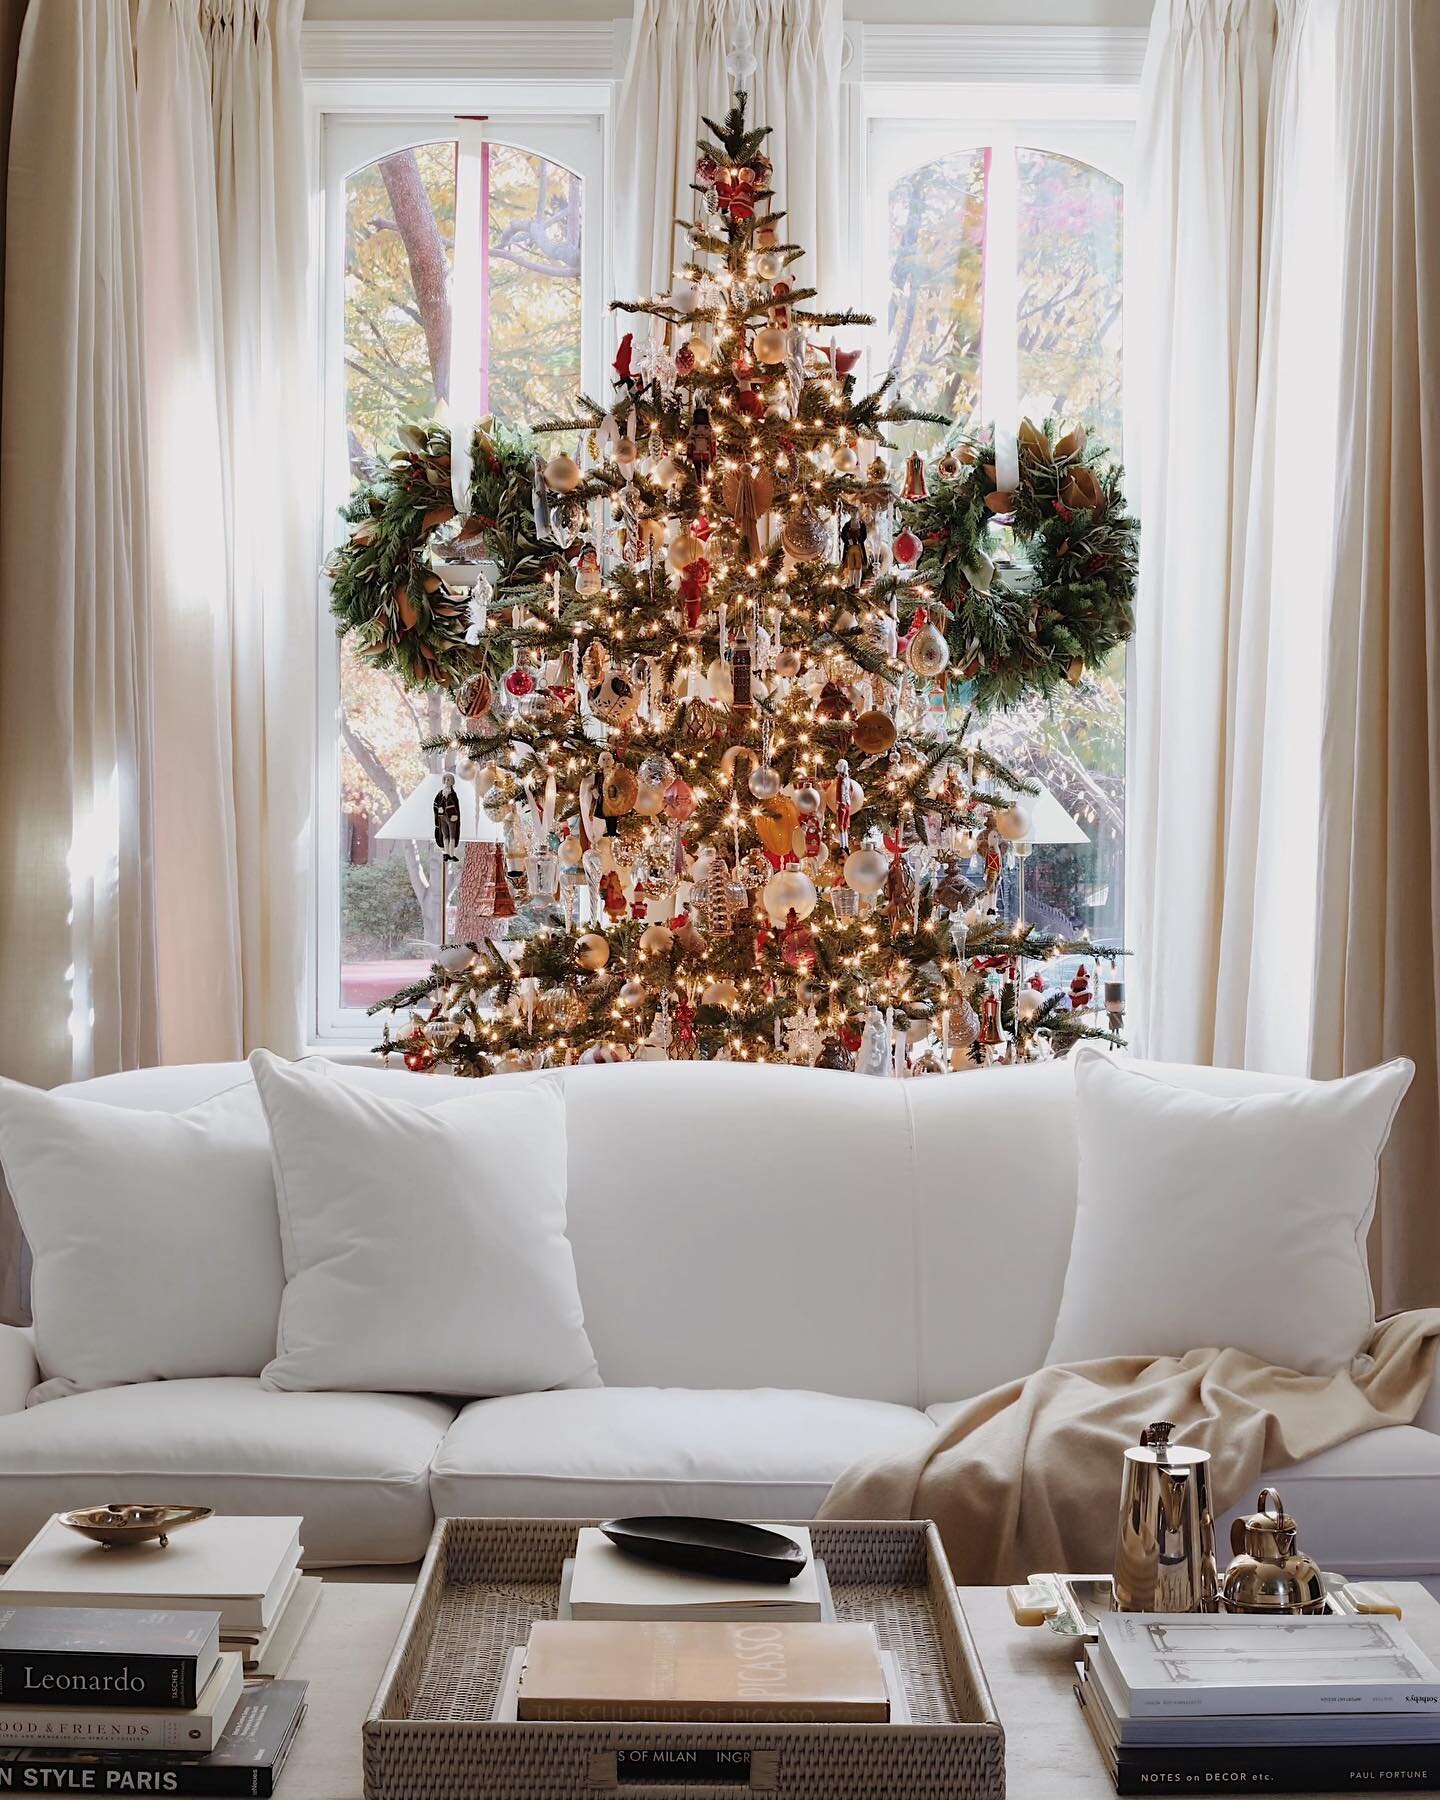 &lsquo;Tis the Season 🤍
.
.
.
.
.
.
.
.
#holidays #joshyoungdesignhouse #holidayseason #artisthome #holidayseason #holidaydecor #christmas #christmasdecor #christmastree #home #interior #interiors #interiordesign #livingroom #neutralstyle #holiday #